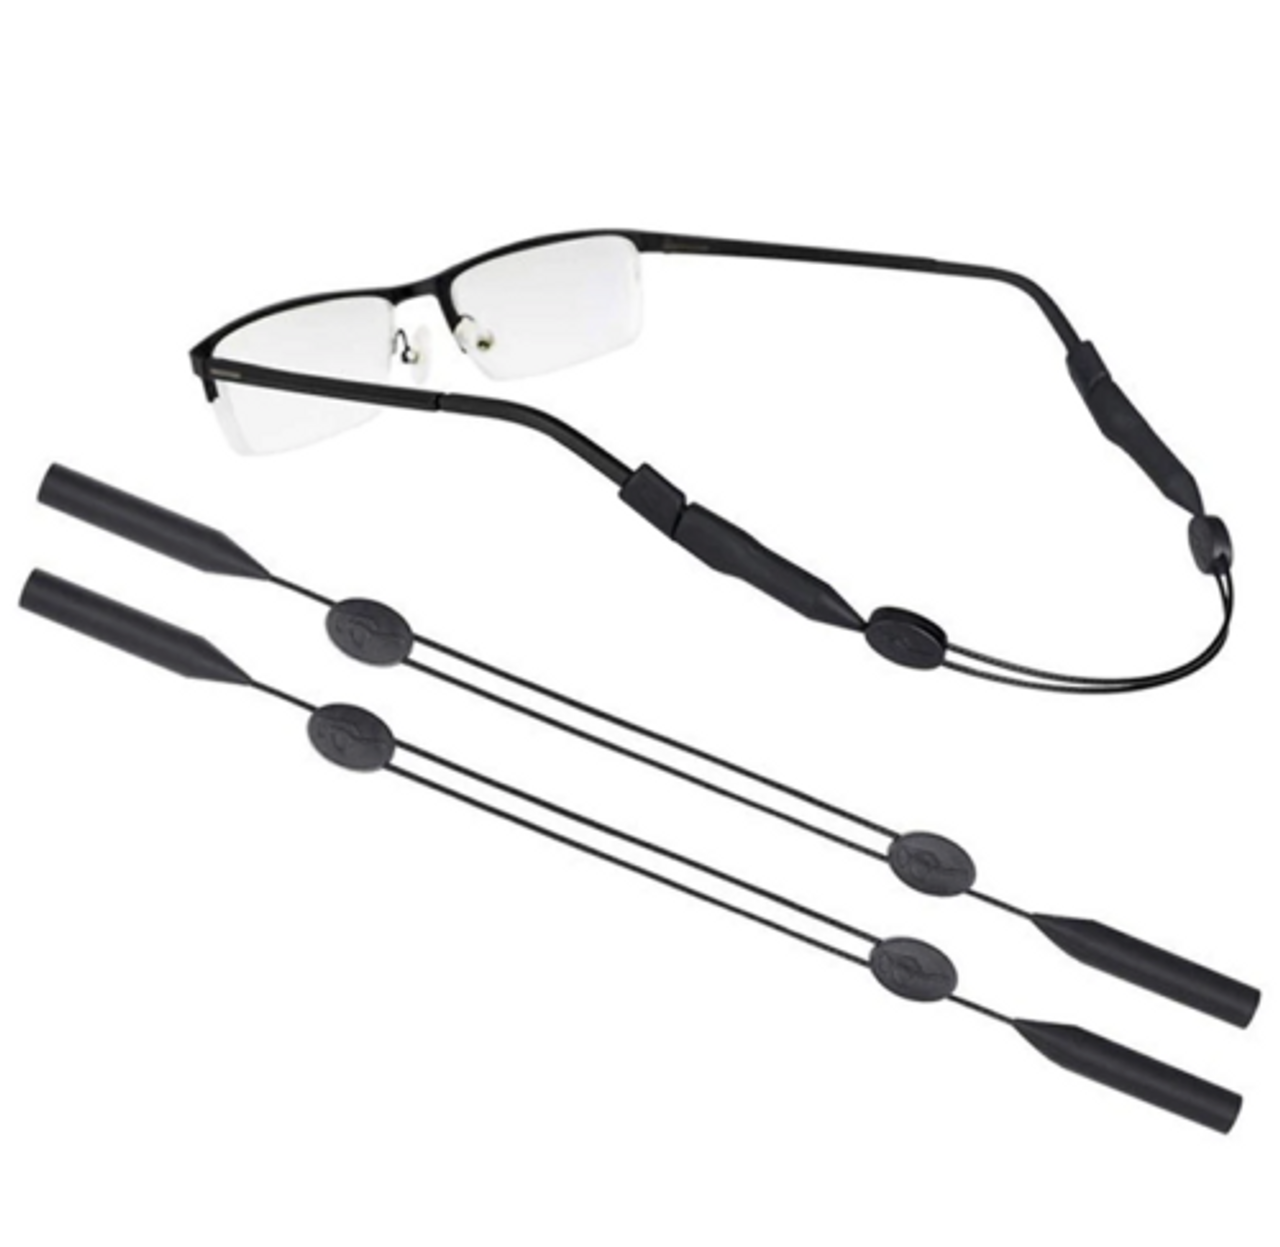 2 x Glasses Strap Neck Cord Sports Eyeglasses Band Sunglasses Rope